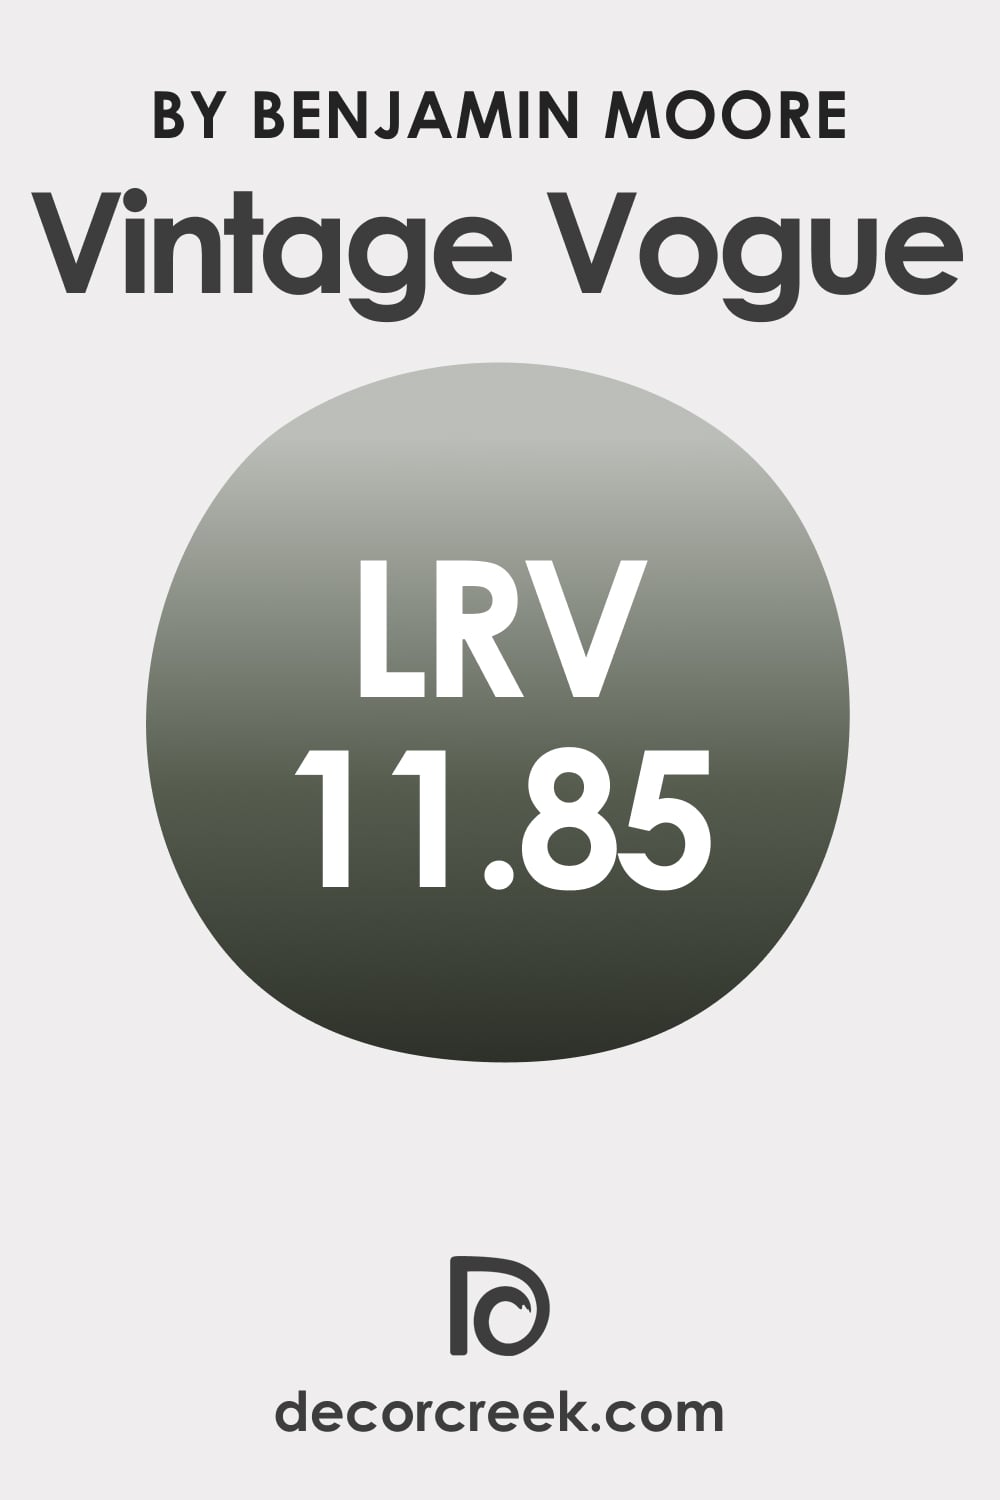 What LRV Vintage Vogue 462 Has?